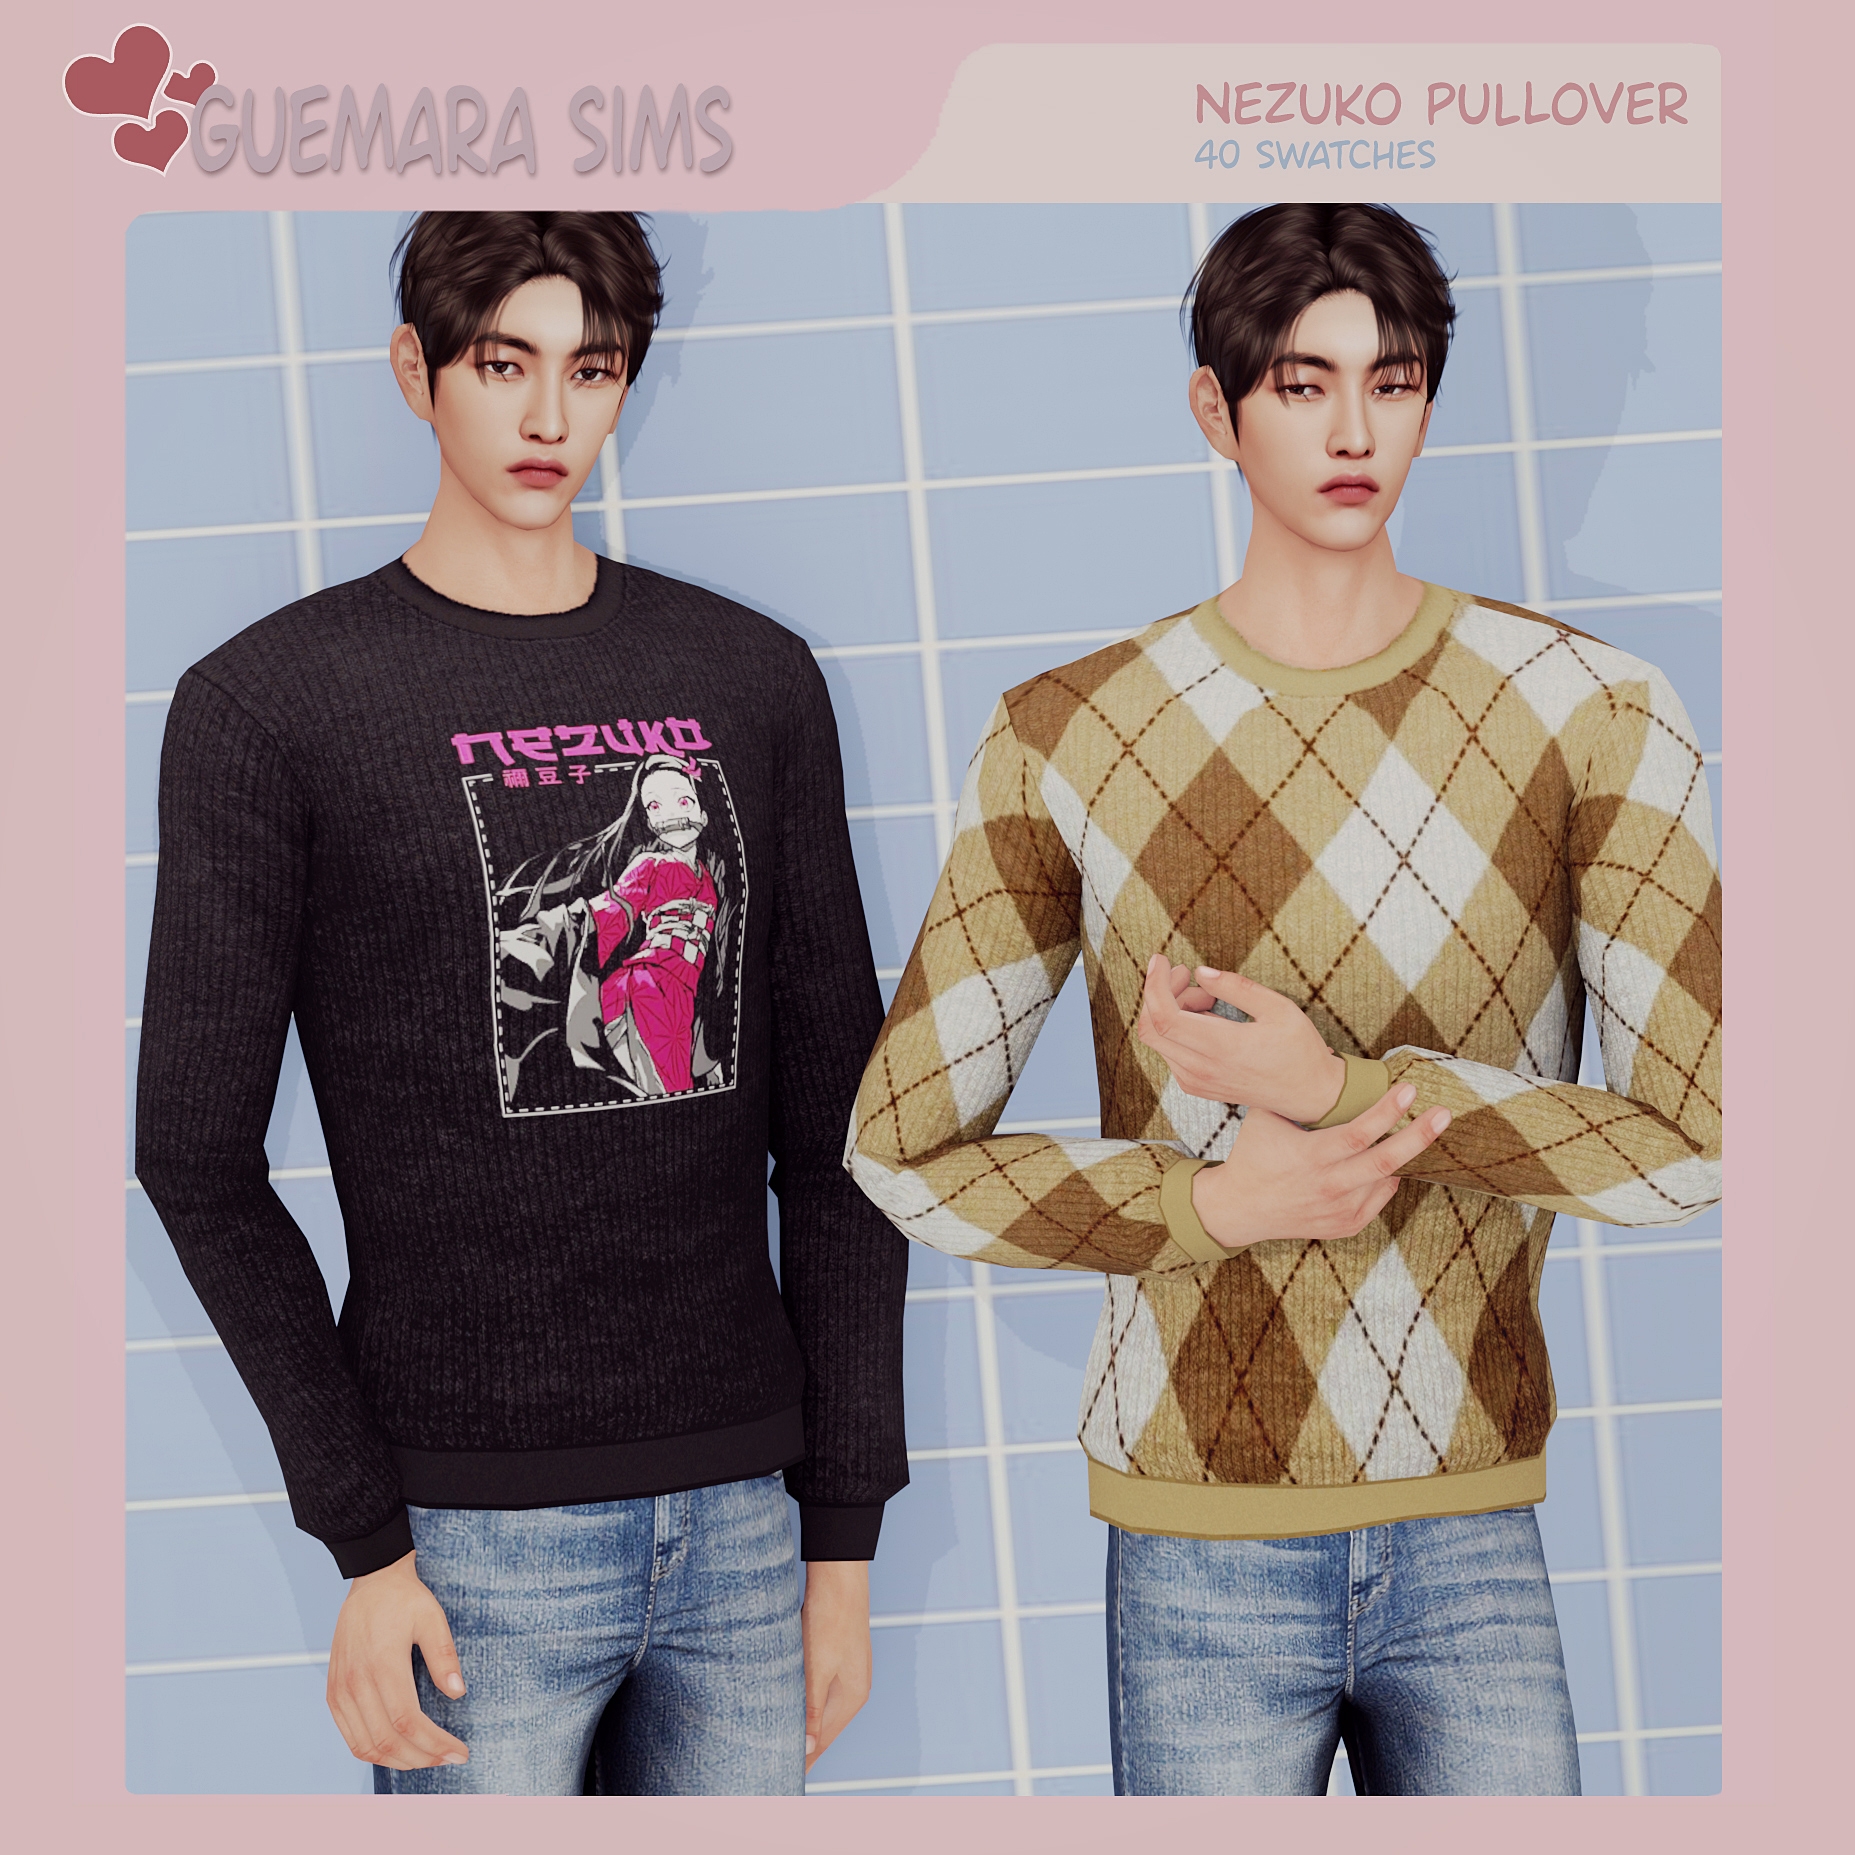 Nezuko pullover - The Sims 4 Create a Sim - CurseForge